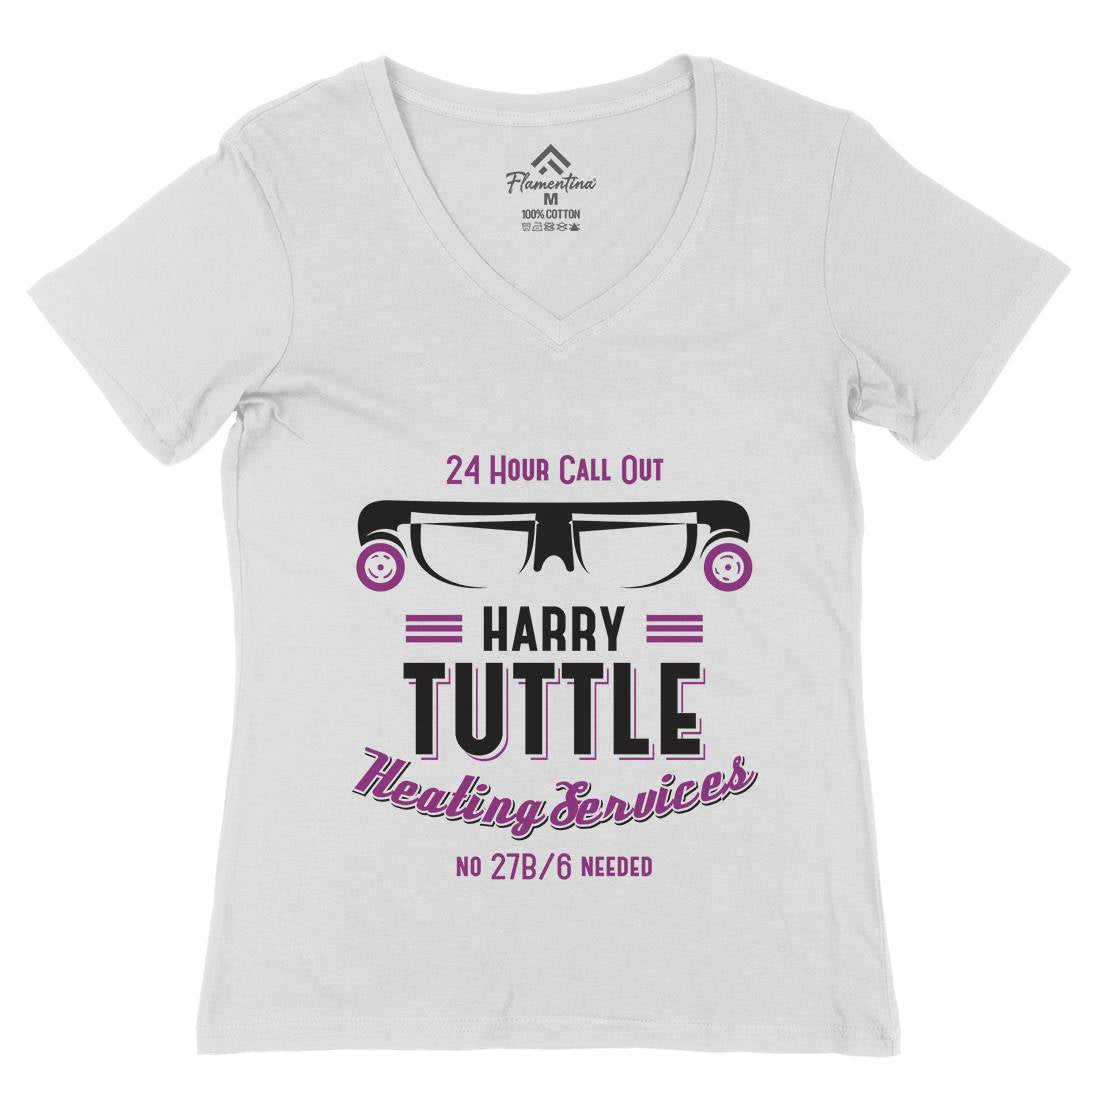 Tuttle Heating Services Womens Organic V-Neck T-Shirt Work D301